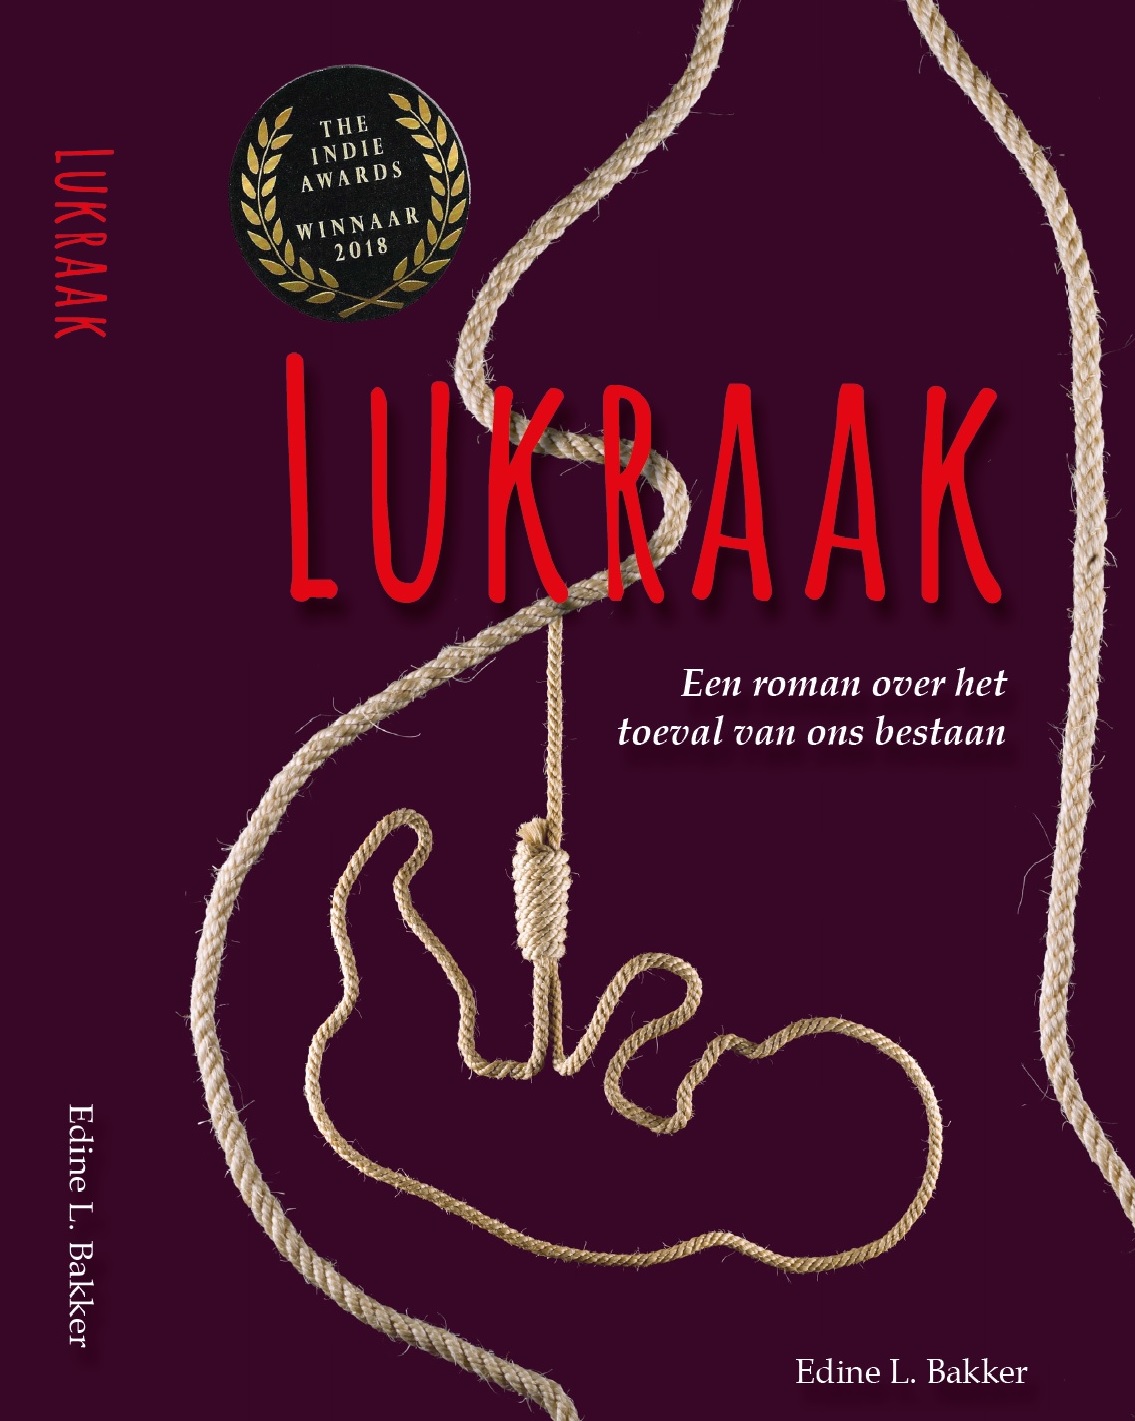 Lukraak (Ebook)